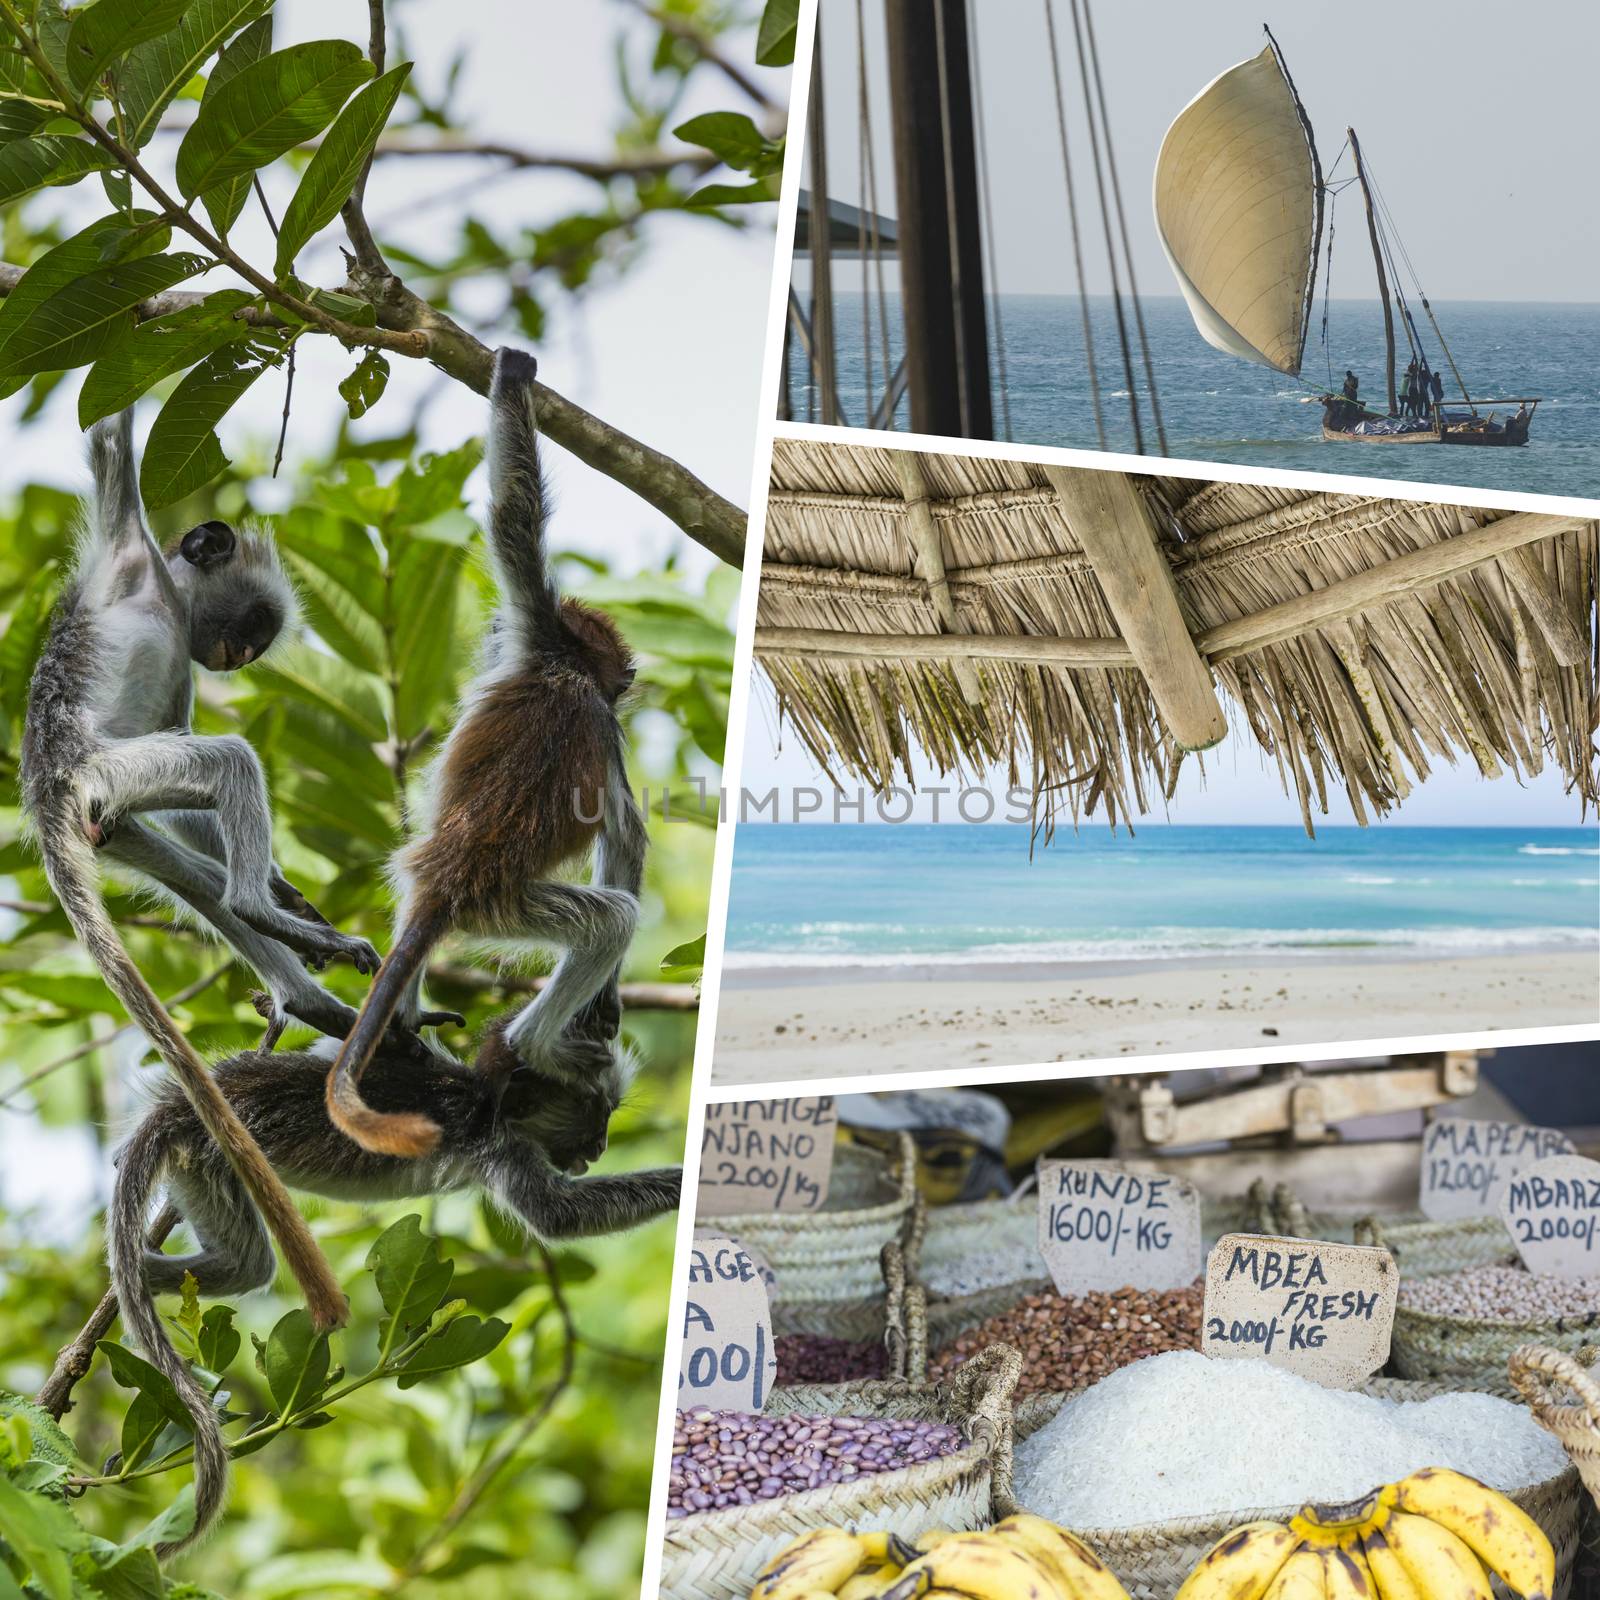 Collage of Zanzibar images - travel background (my photos)